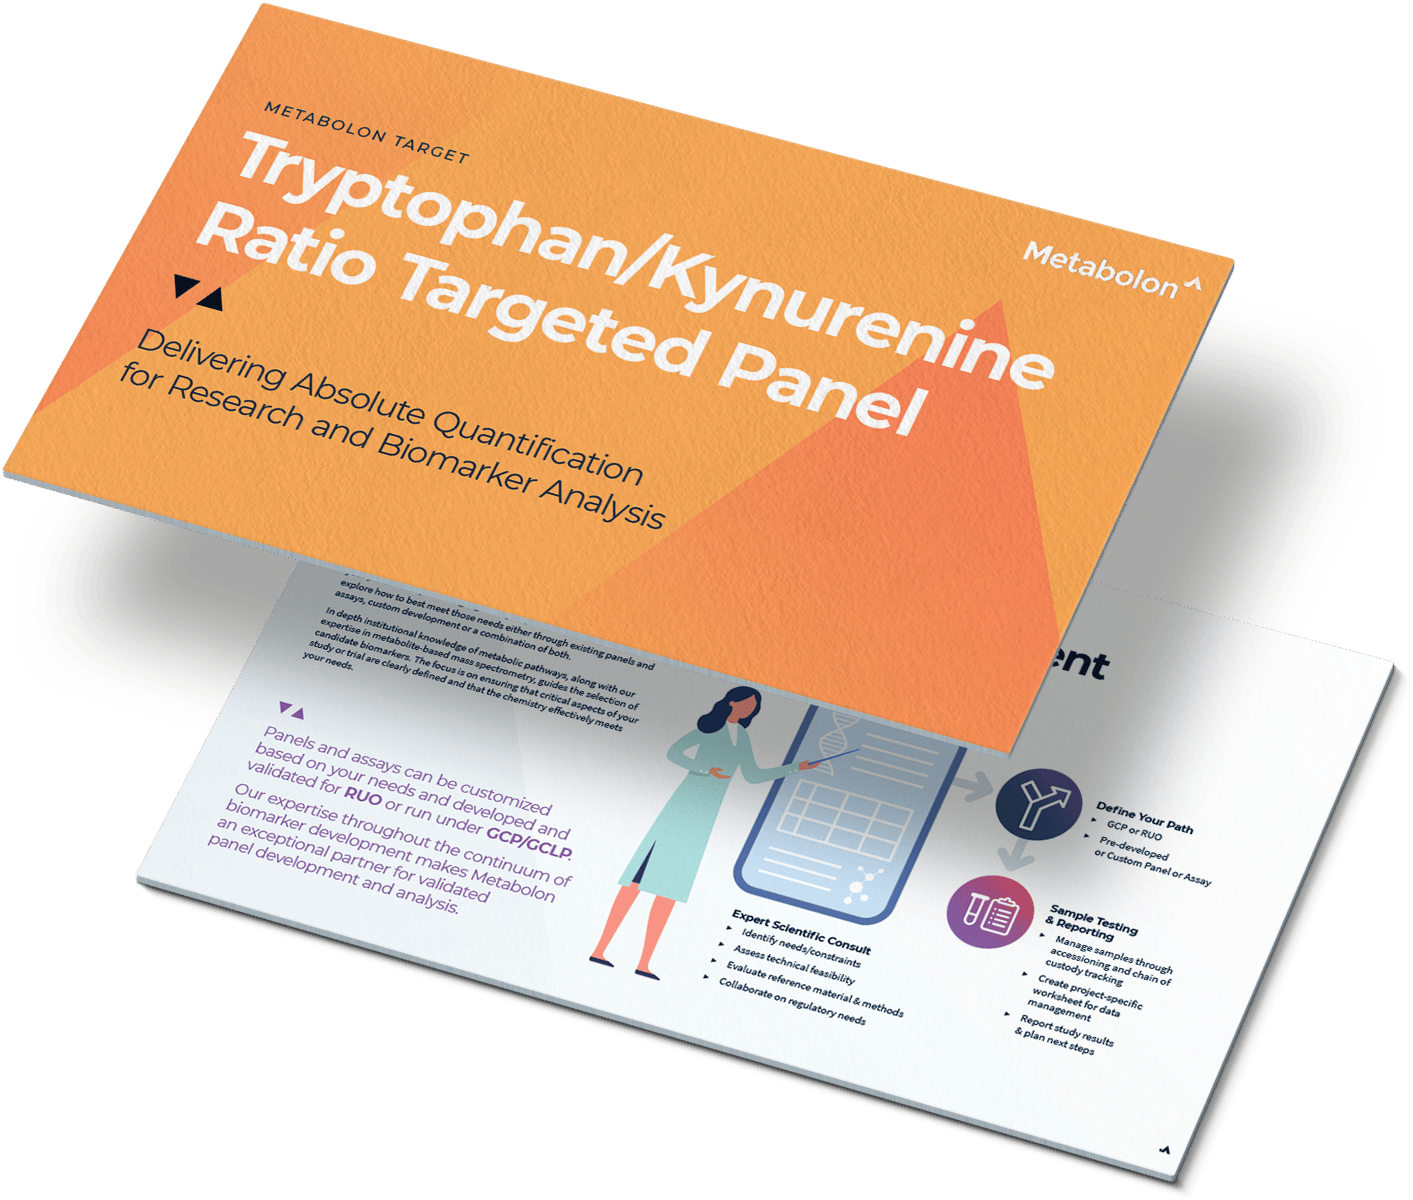 Tryptophan/Kynurenine Ratio Targeted Panel